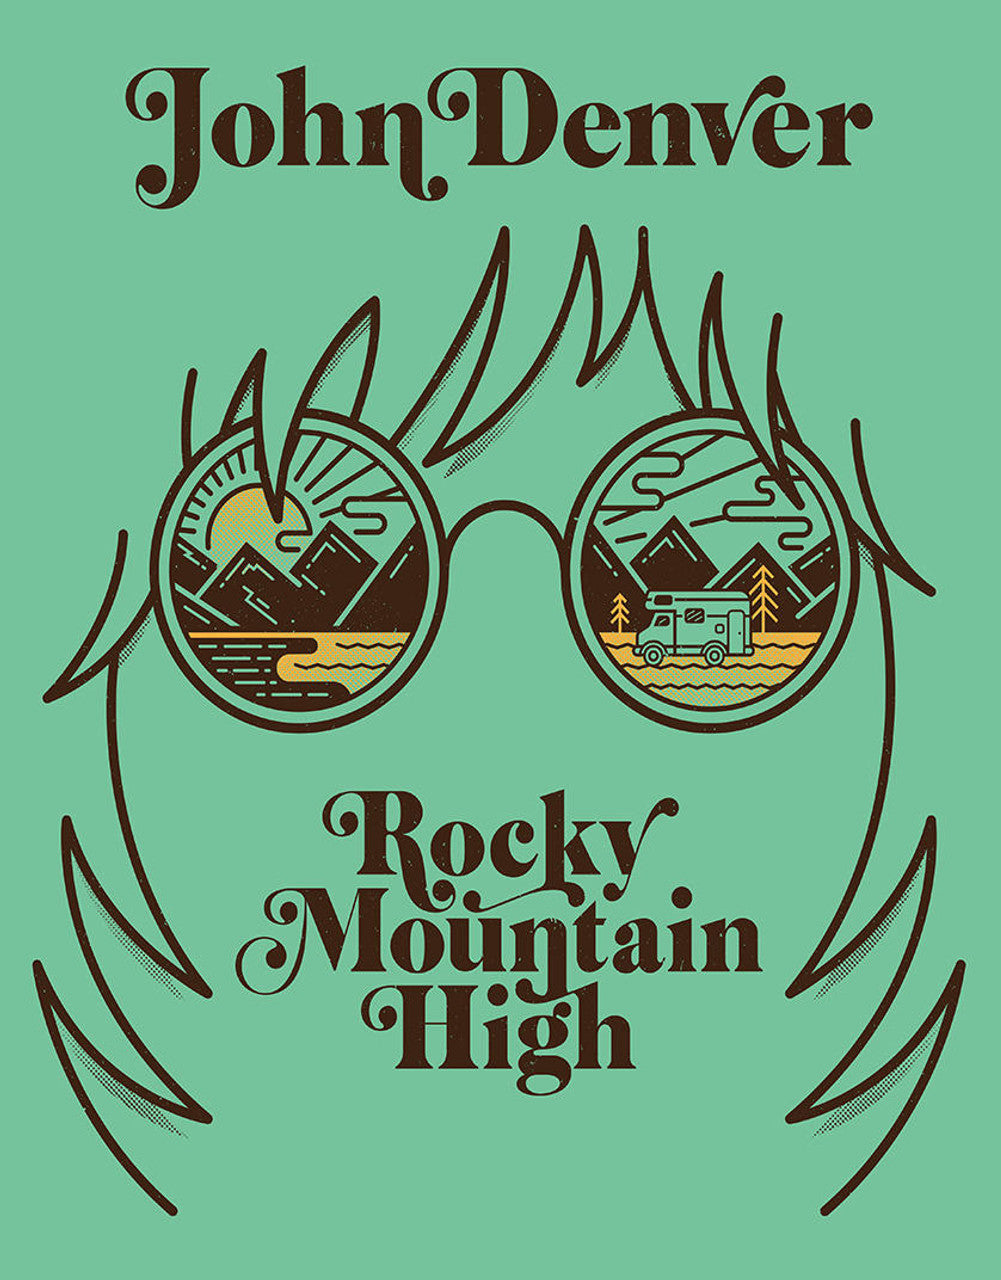 John Denver Rocky Mountain High 12.5" x 16" Metal Tin Sign - 2607